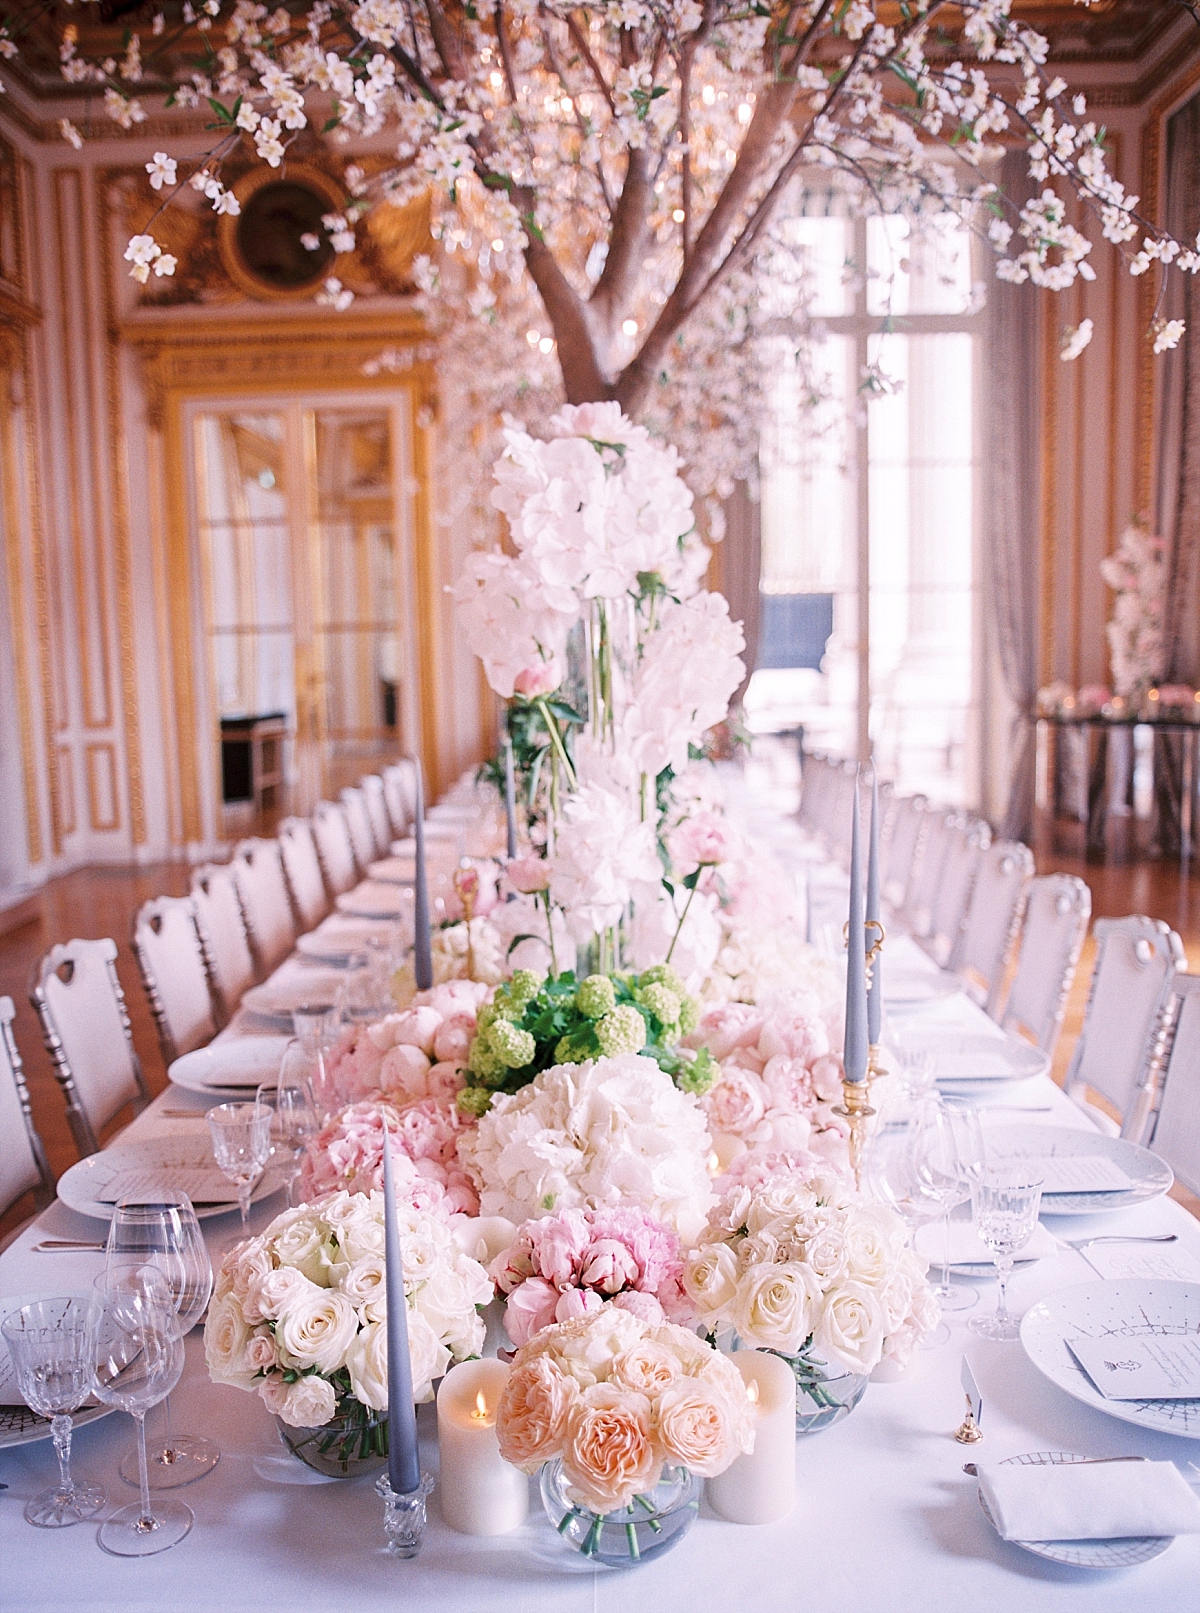 wedding table ate the Hotel de Crillon paris, in the historic salon 